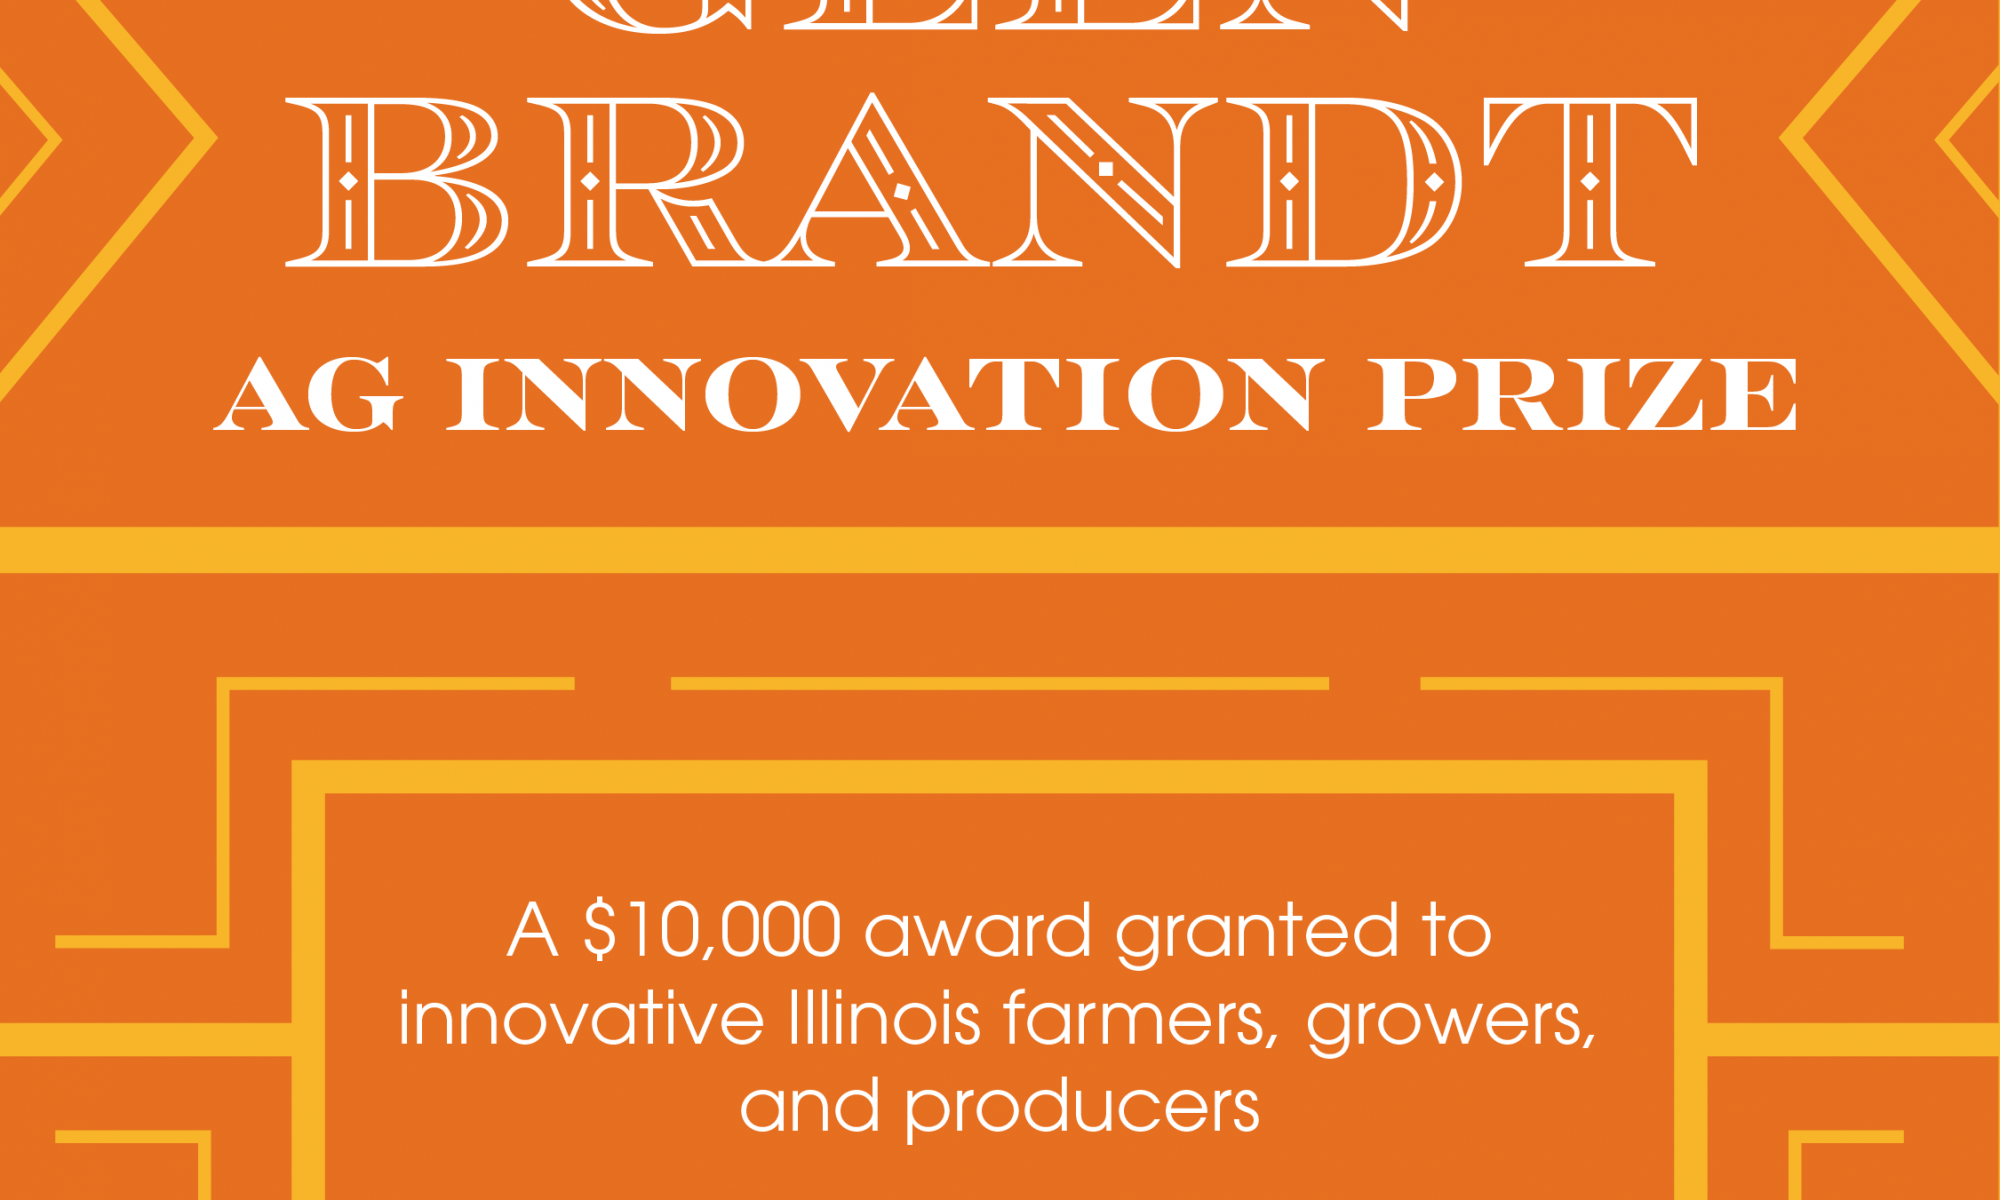 Glen Brandt Ag Innovation Prize